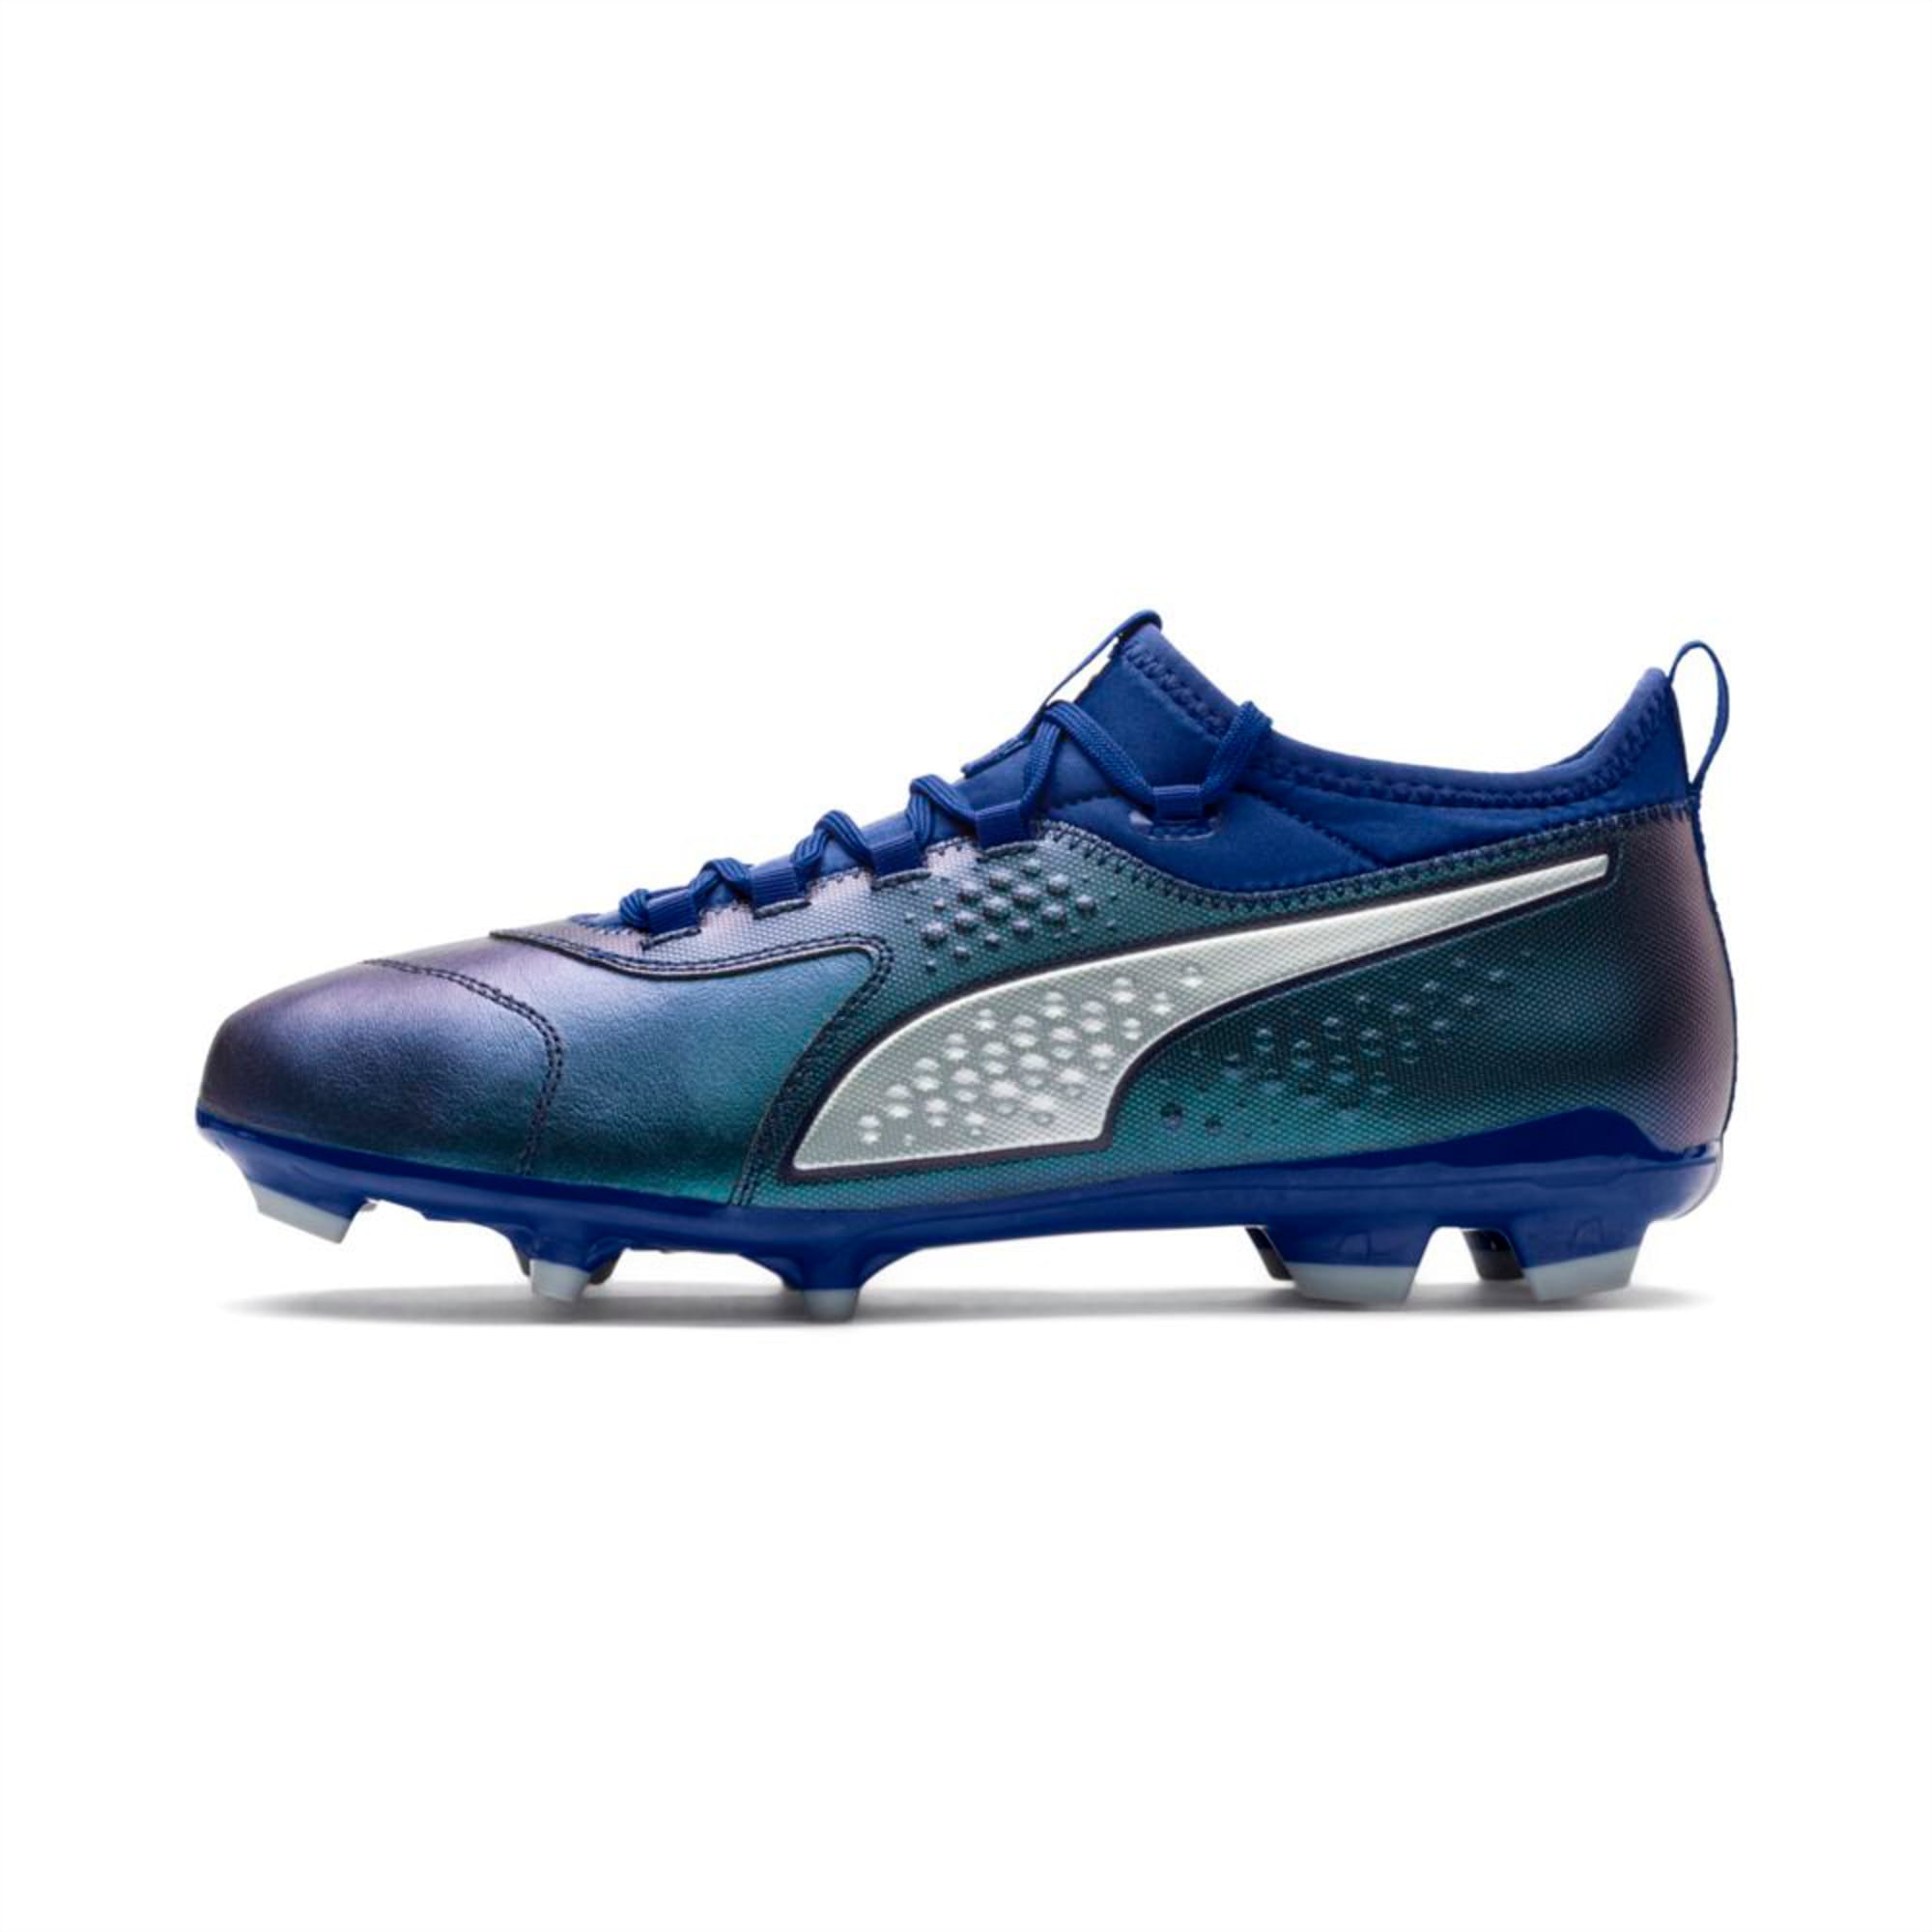 PUMA ONE 3 Leather FG Men's Football Boots | Sodalite Blue-Silver-Peacoat |  PUMA Shoes | PUMA